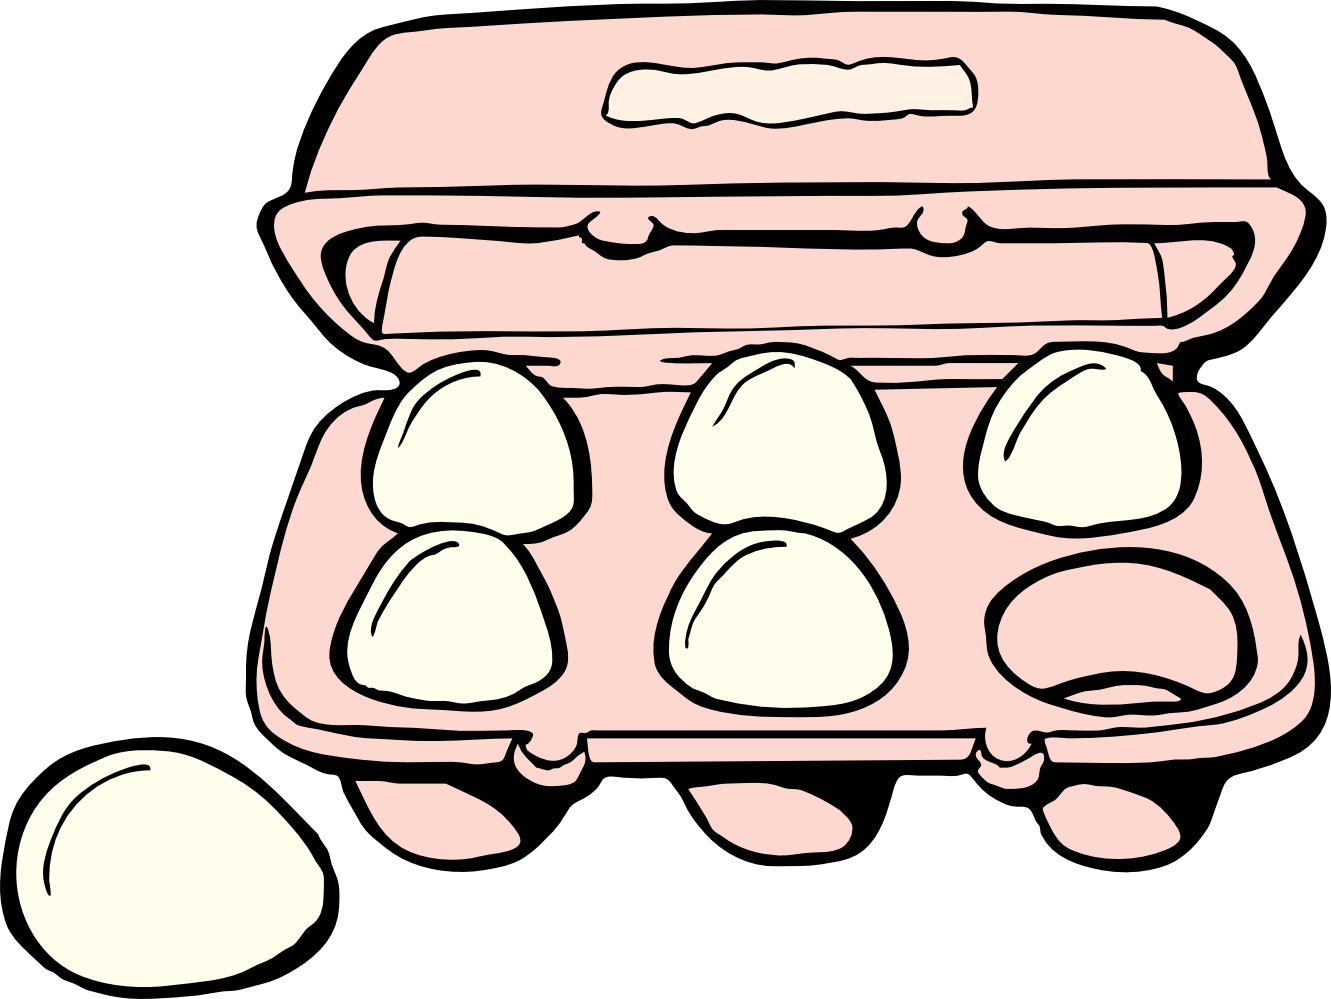 Egg carton clipart black and white